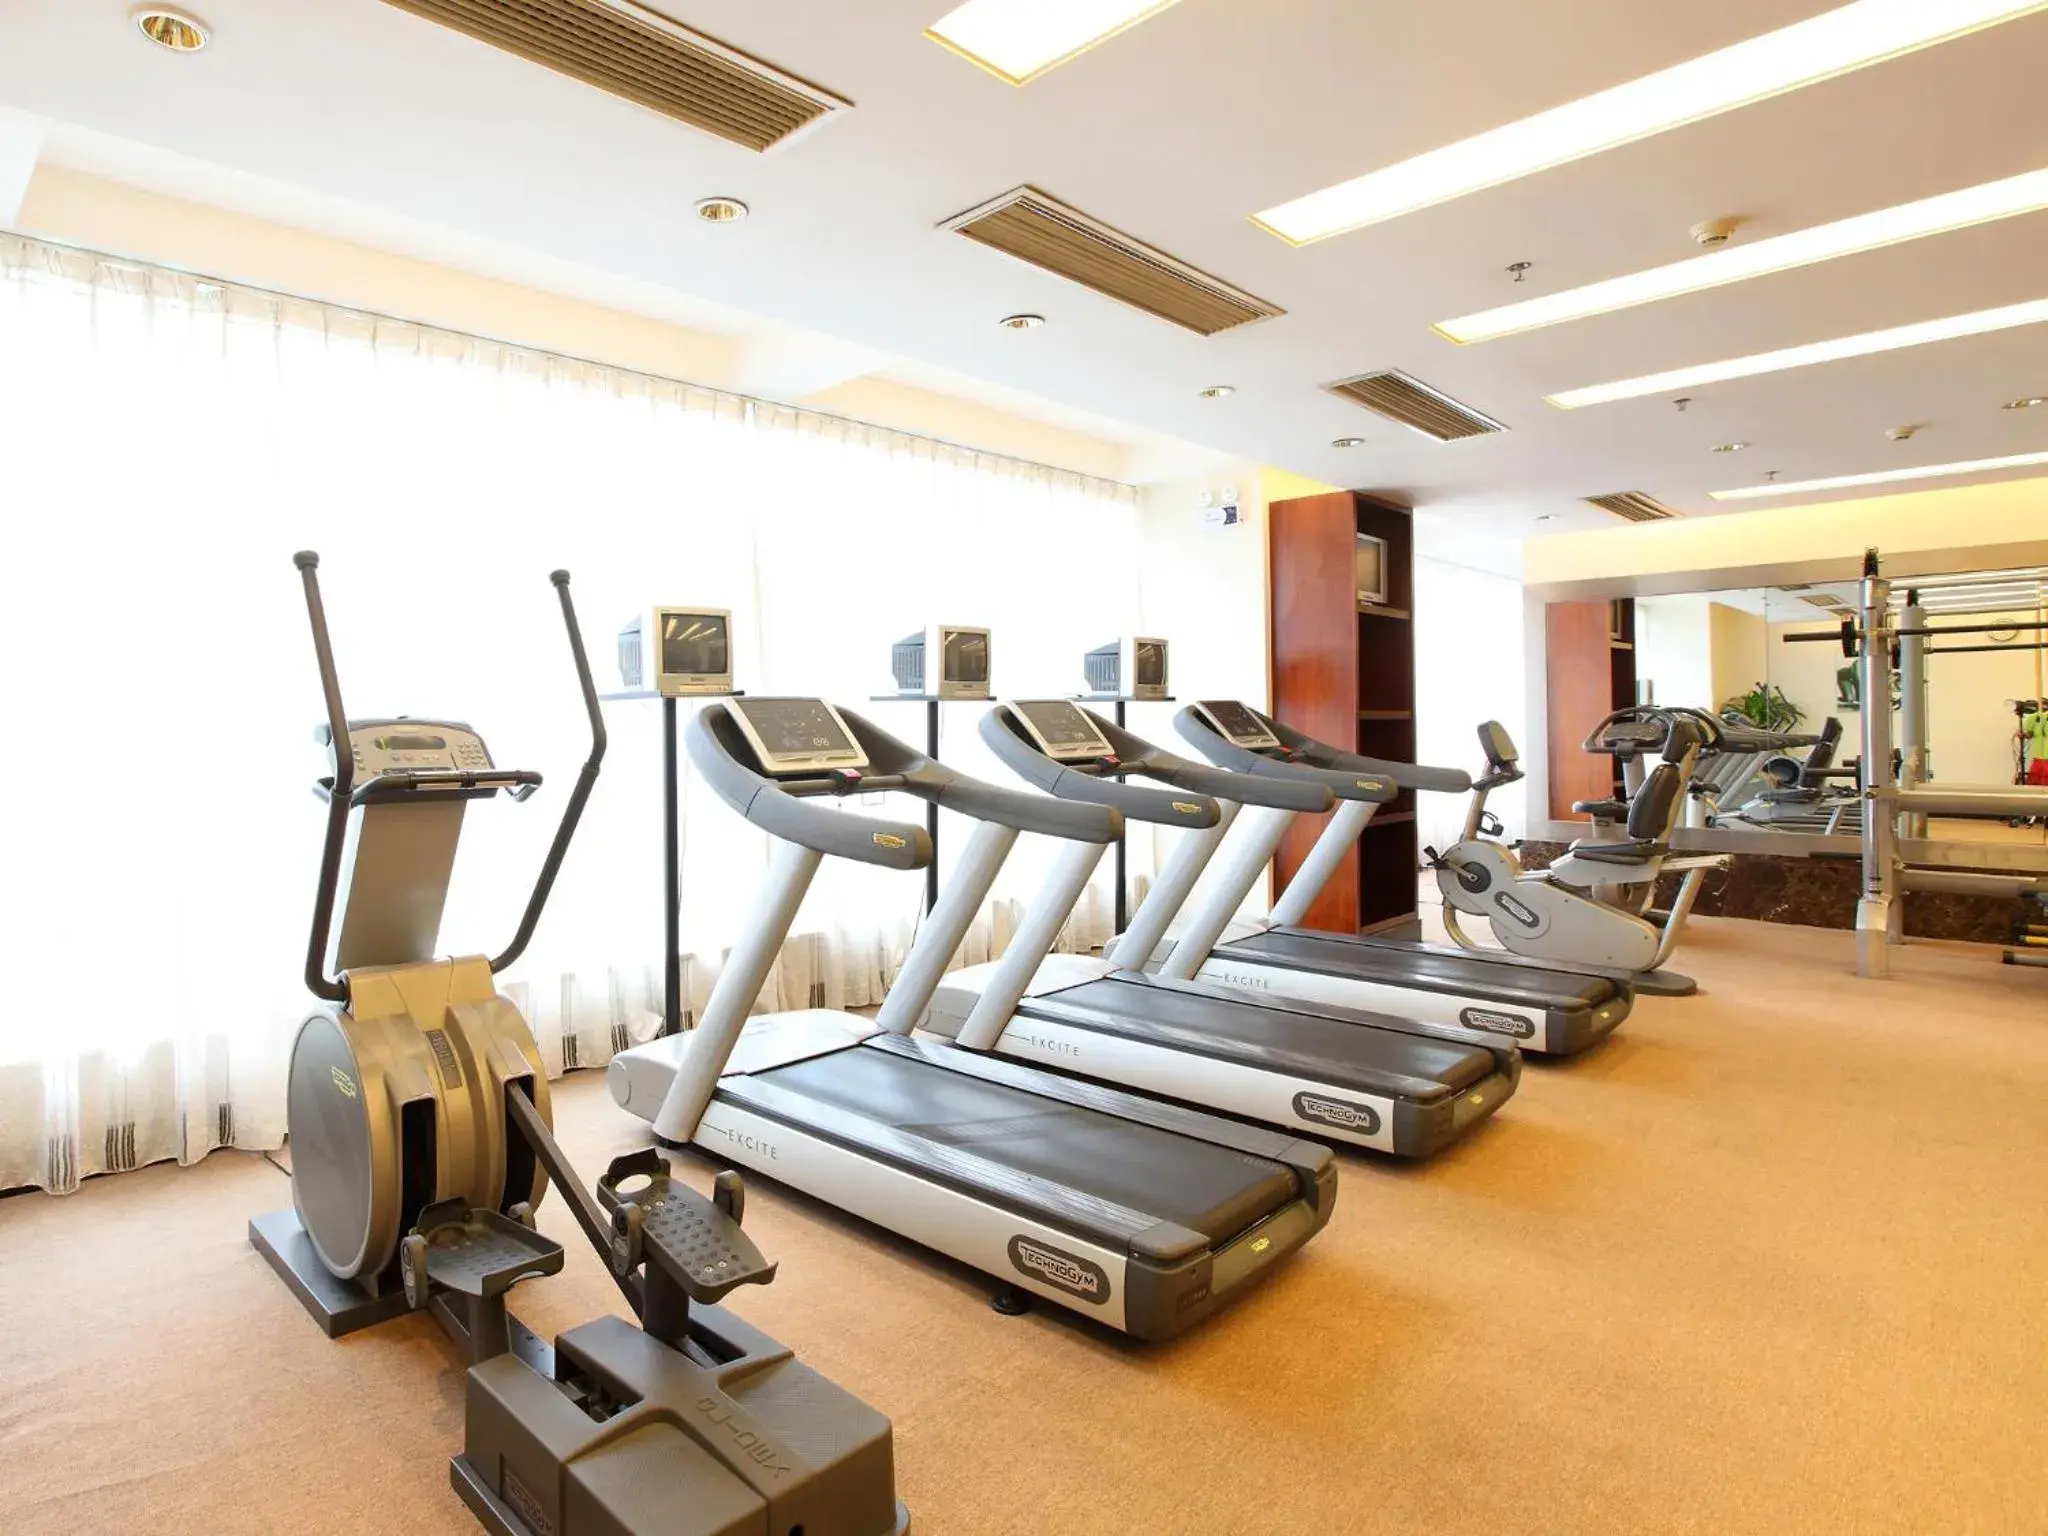 Fitness centre/facilities, Fitness Center/Facilities in Grand International Hotel